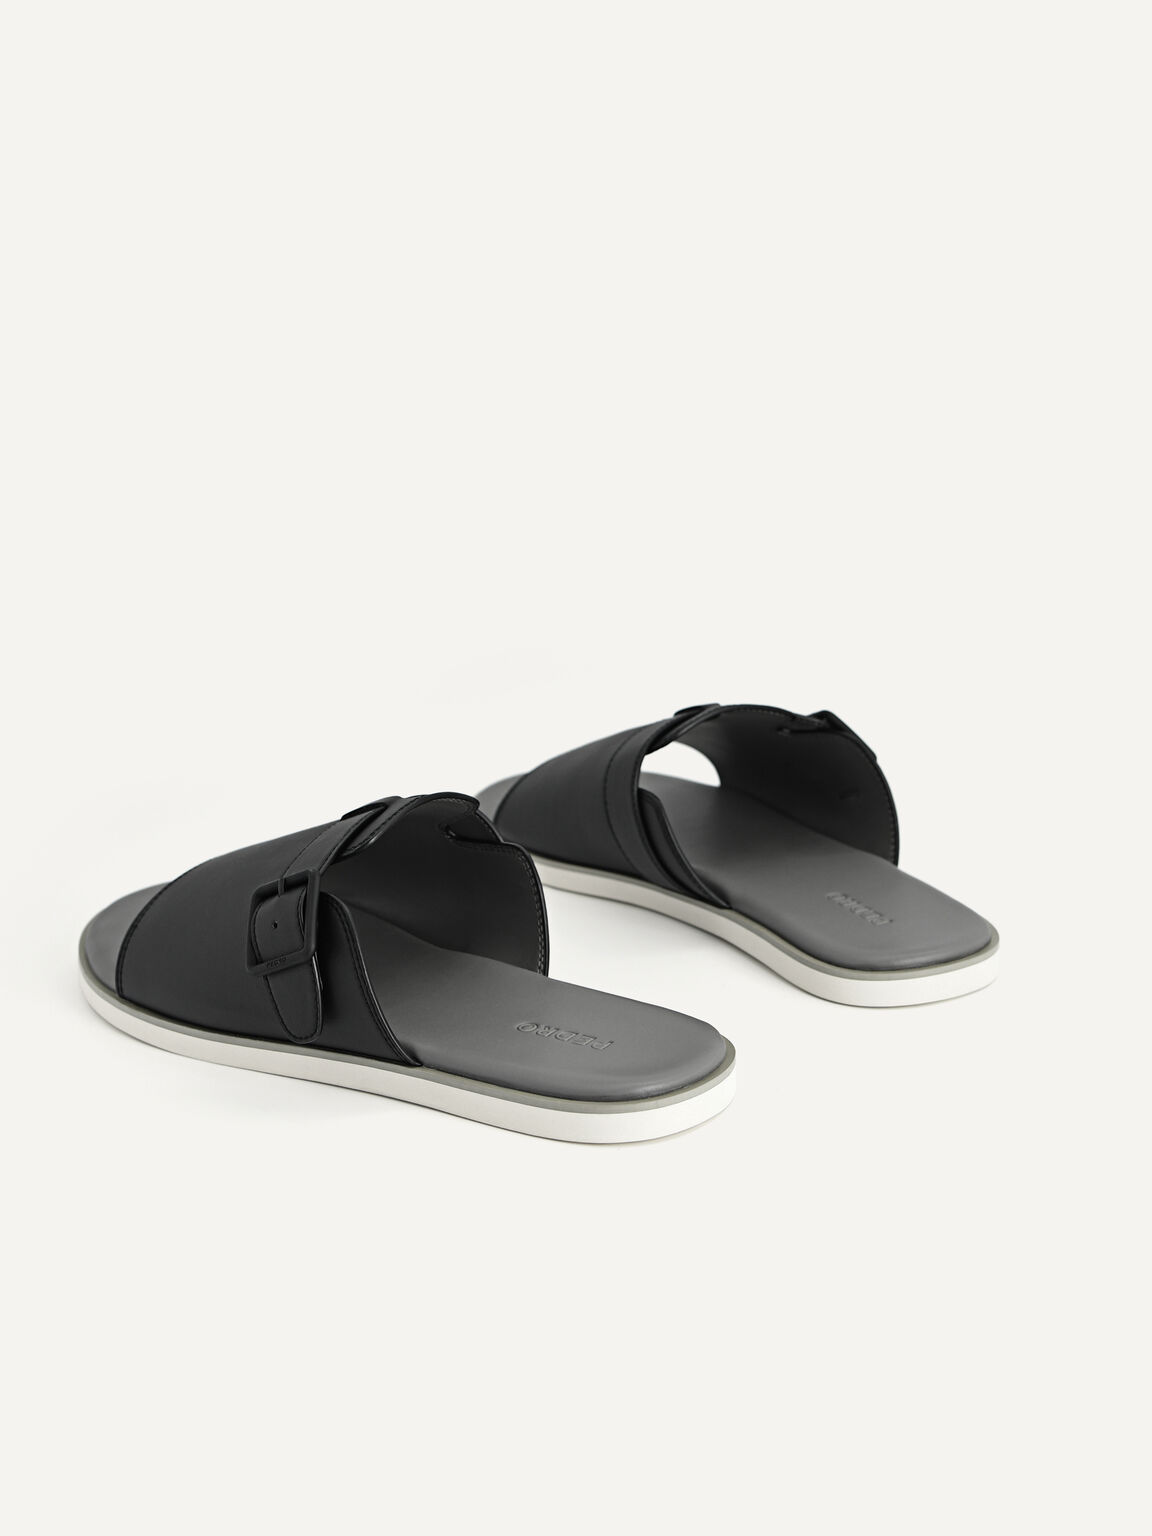 Monochrome Slide Sandals, Black